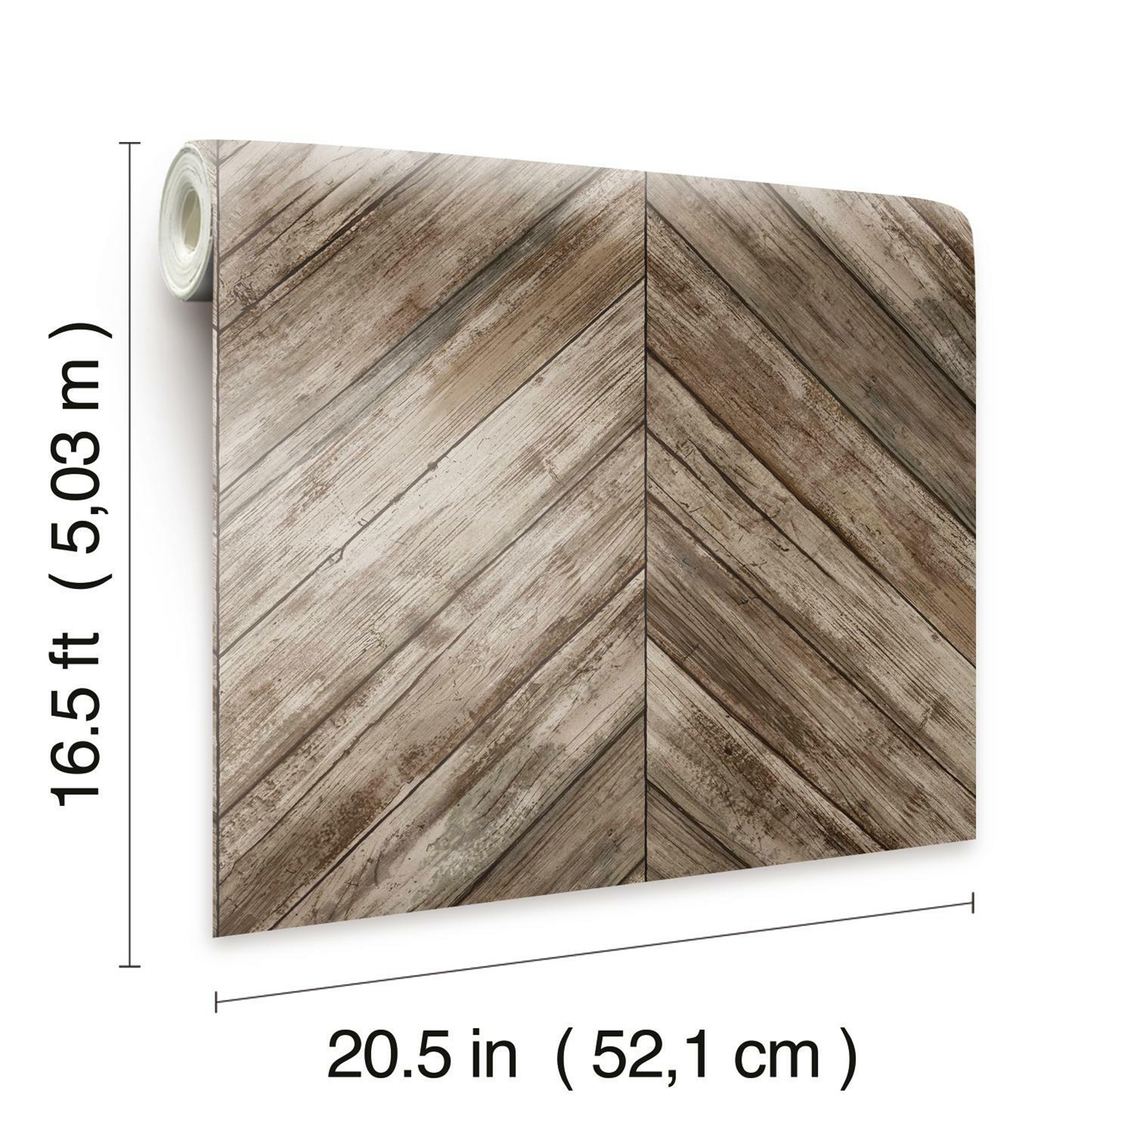 RoomMates Herring Bone Wood Boards Peel and Stick Wallpaper - Image 4 of 8